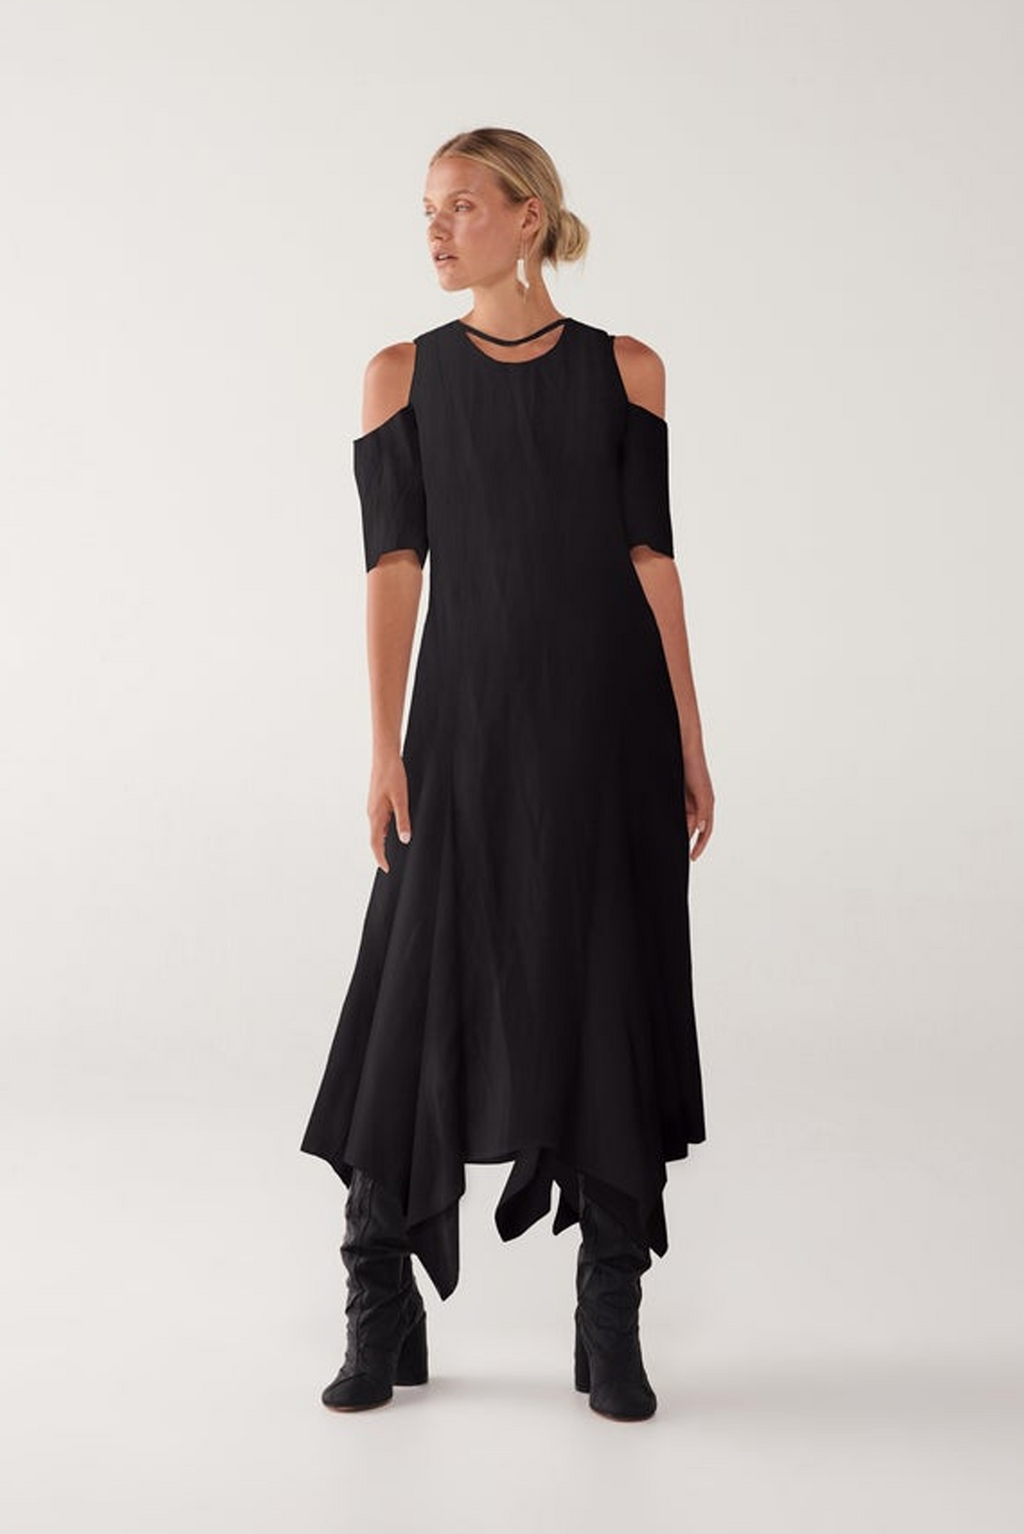 Designer Dresses NZ | Women's Fashion | Wendy's Boutique